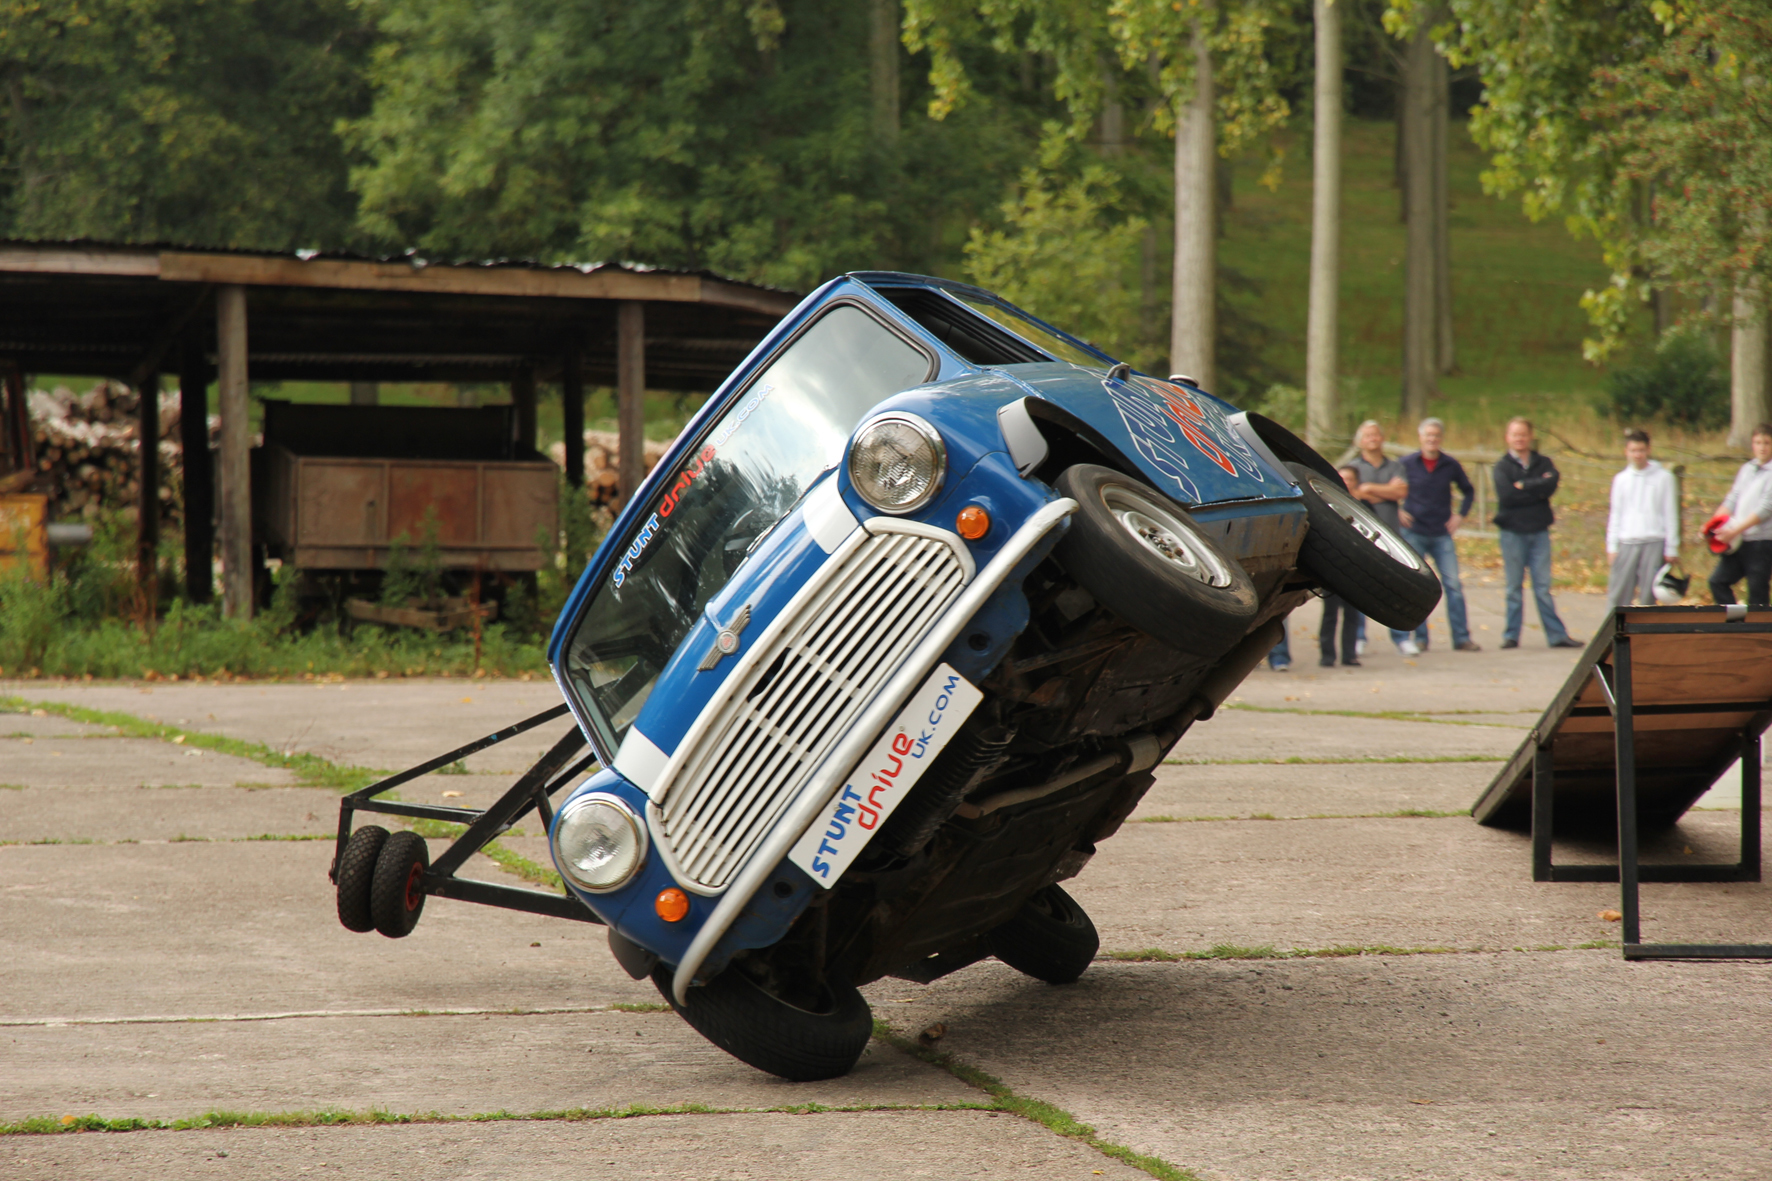 Stunt Drive UK (two wheels)